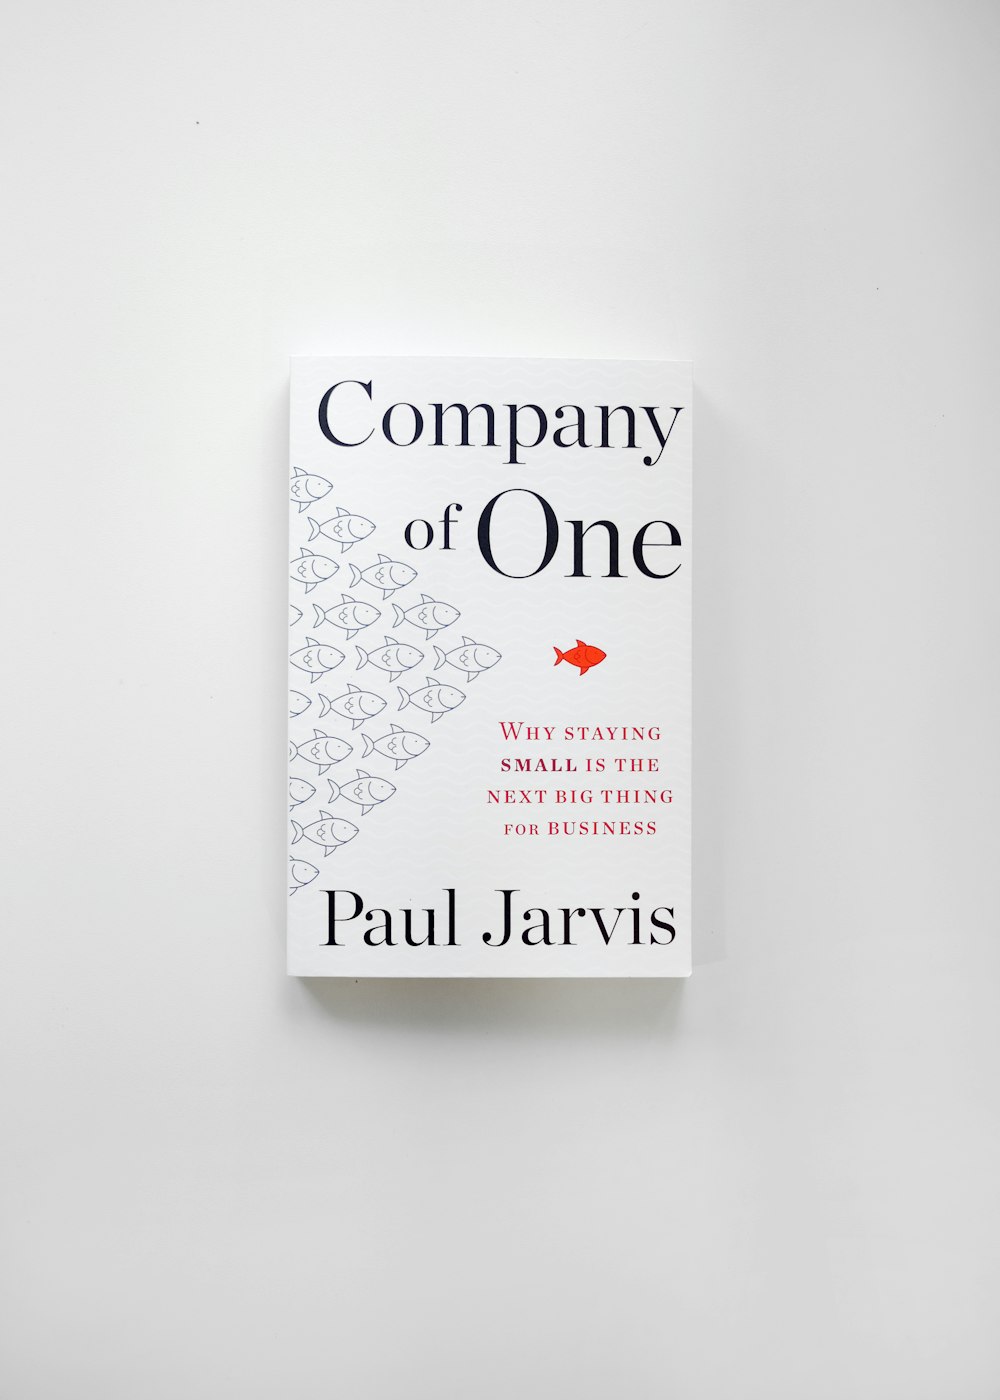 Un exemplaire de The Book Company of One de Paul Jarviss